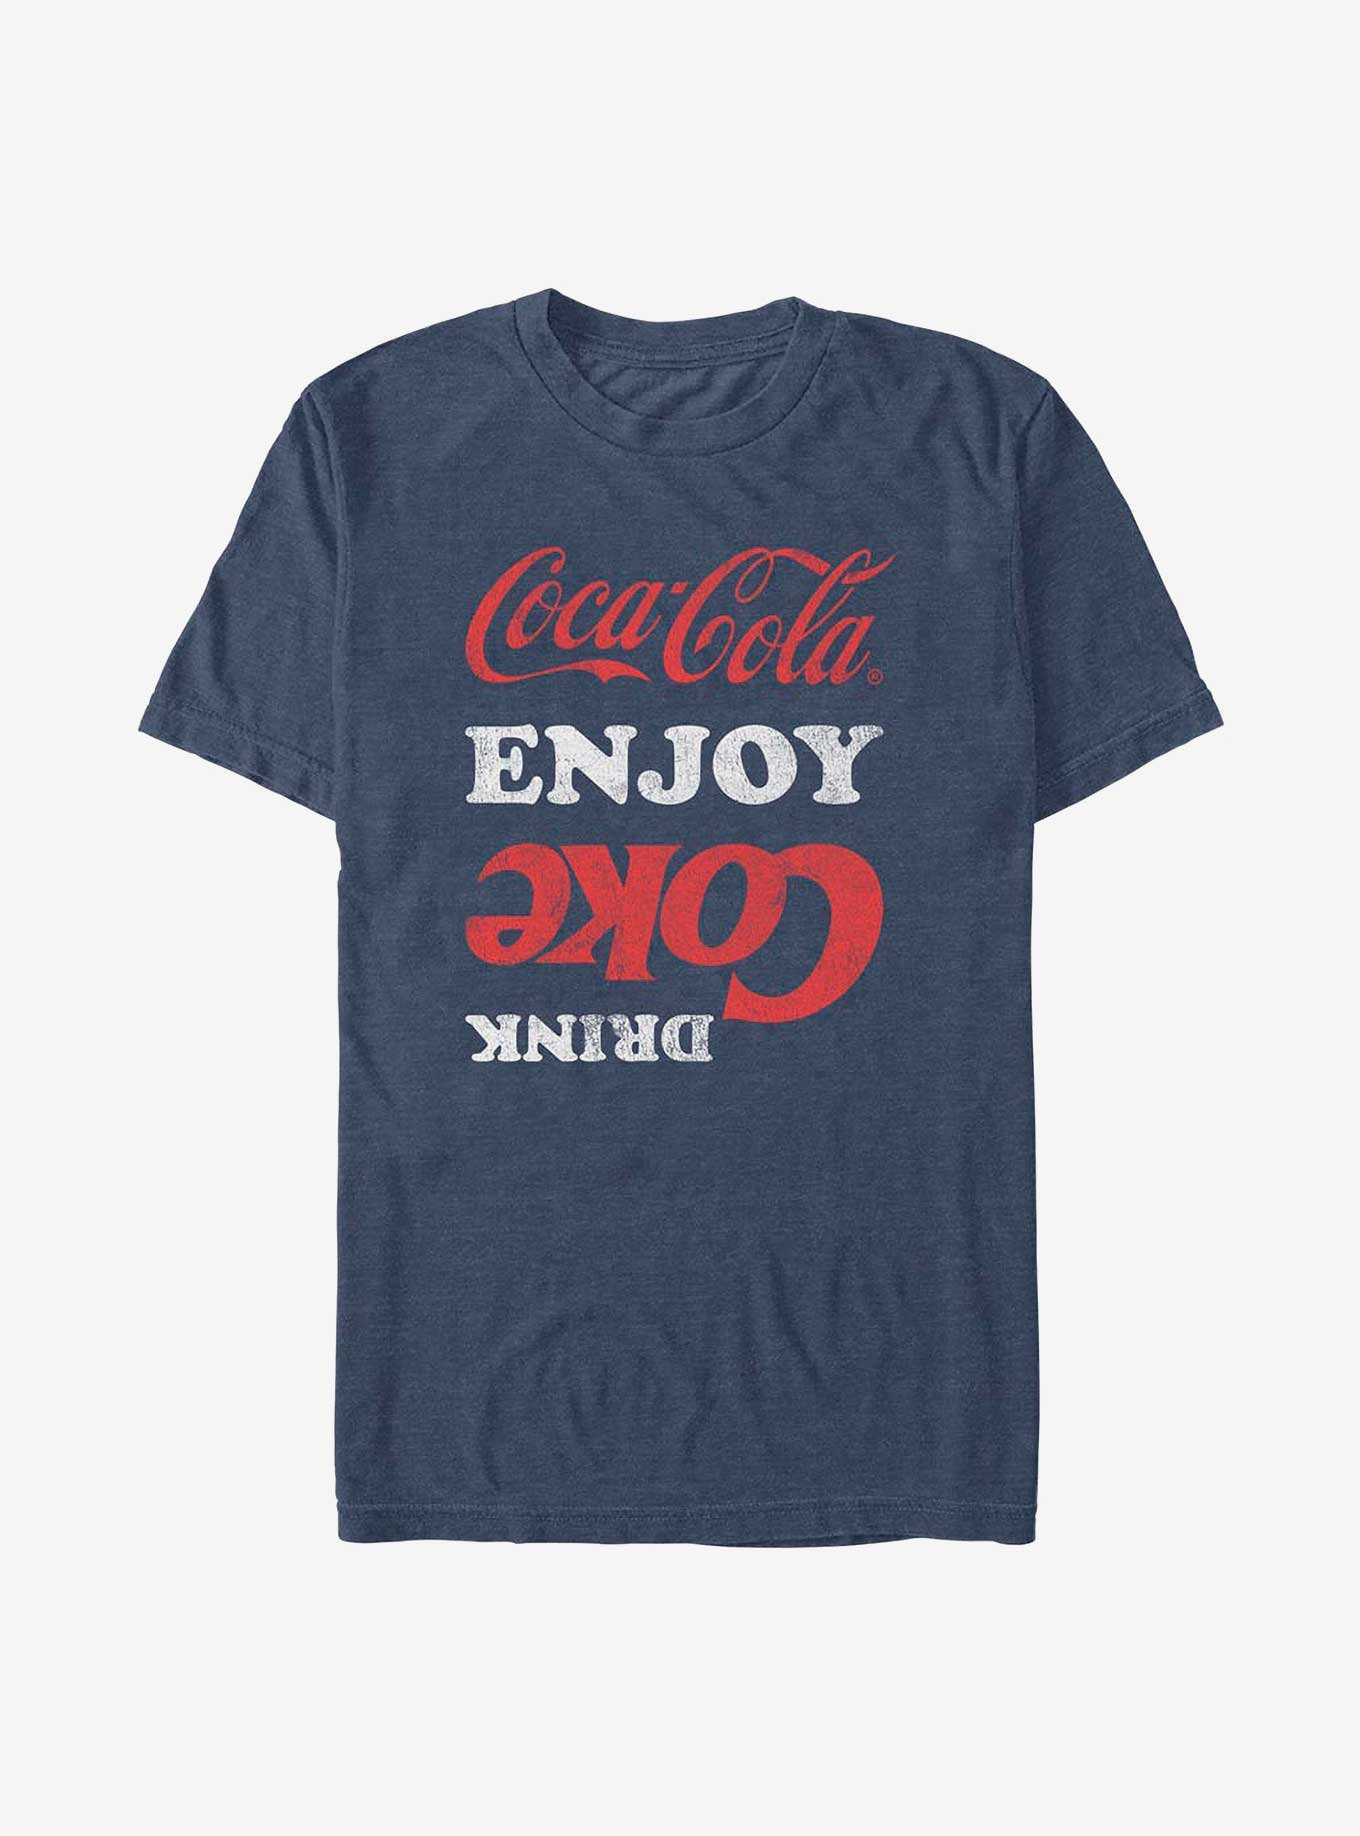 Coca-Cola Drink Enjoy Cola Drink T-Shirt, , hi-res